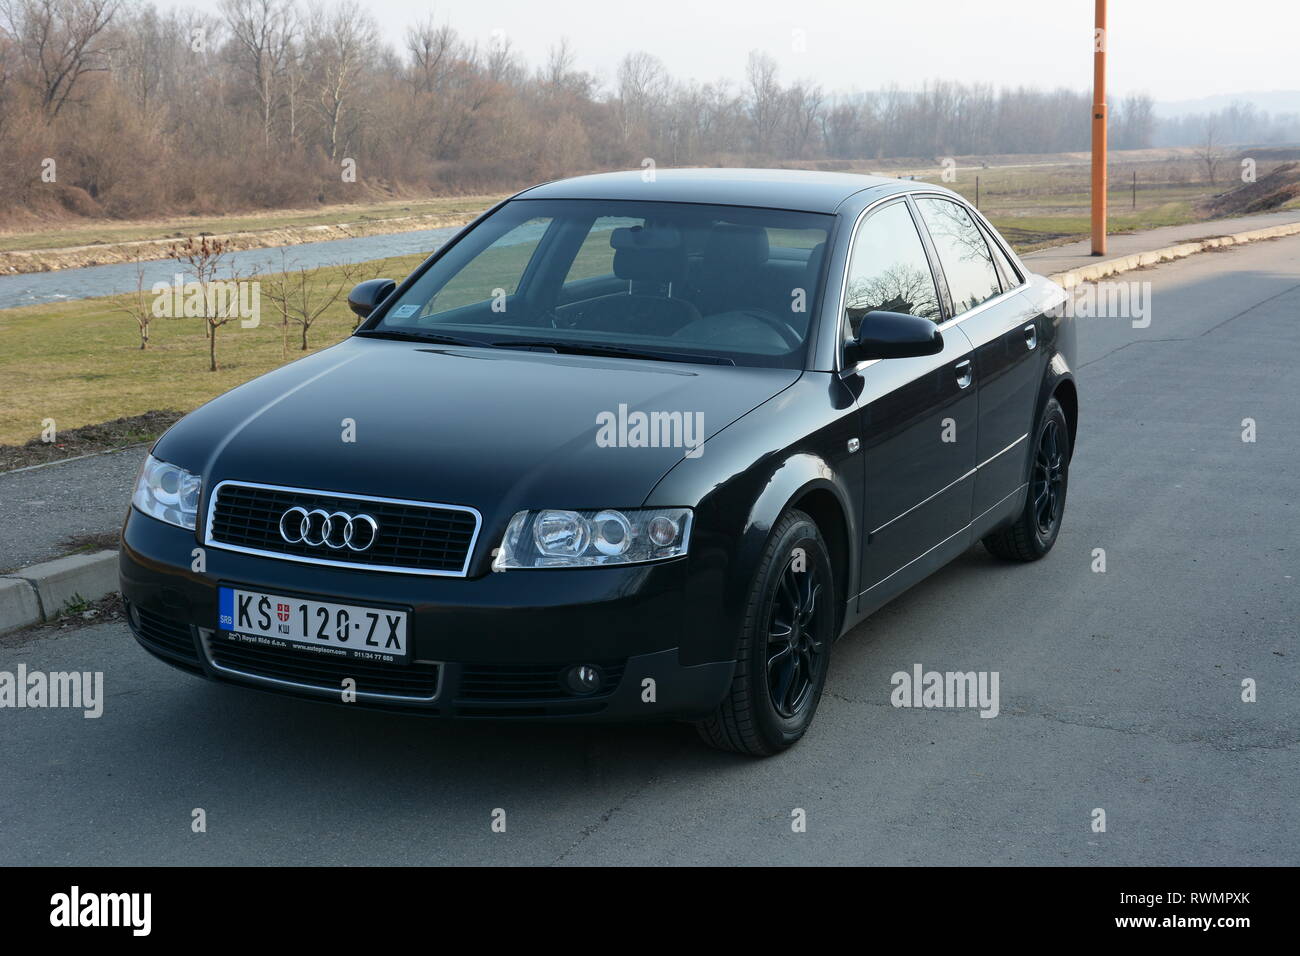 File:Audi A4 Avant (B6) 2.5 TDI (side-front).jpg - Wikipedia